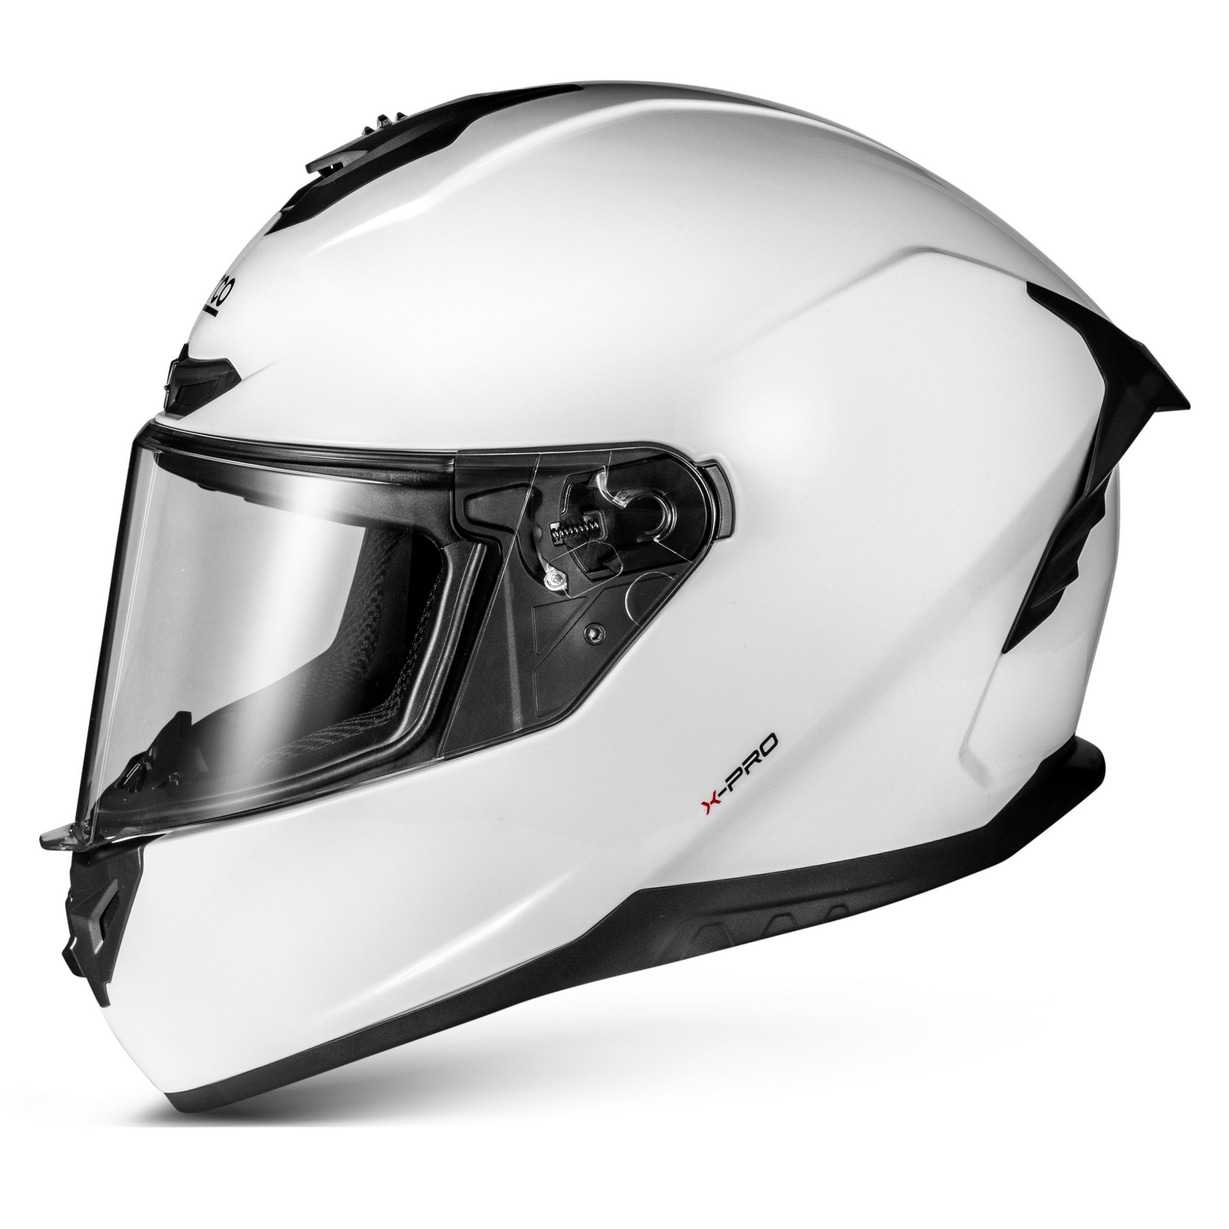 Helmet Sparco X-Pro White